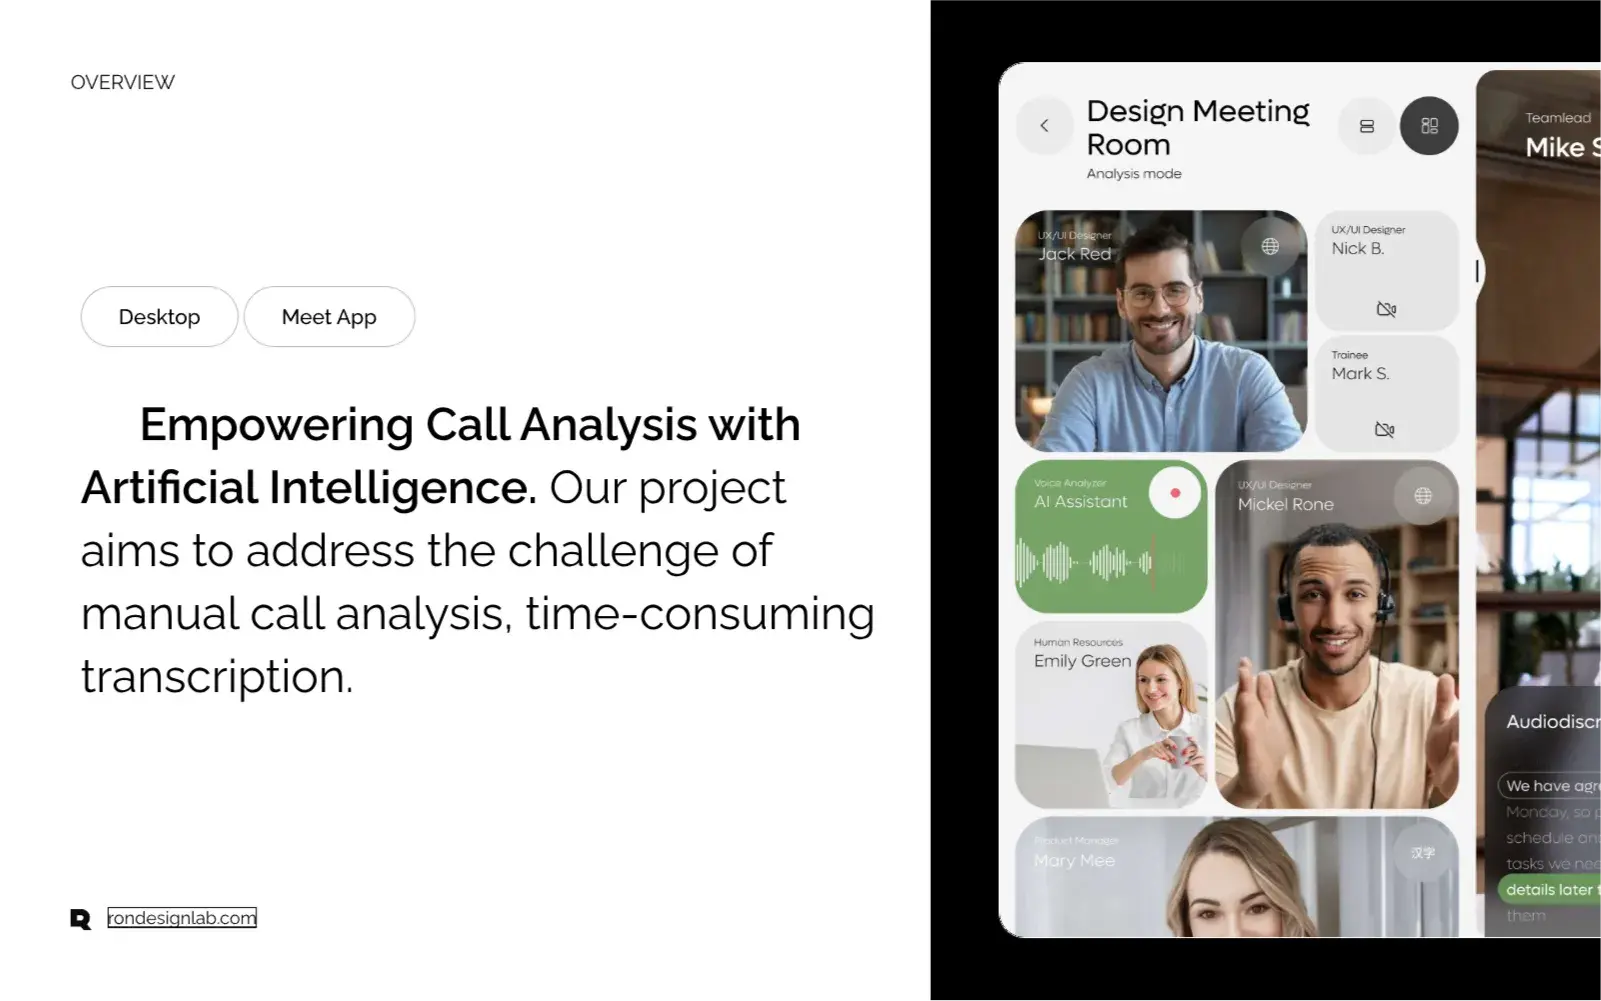 AI-Meet - Revolutionize Your Call Analysis - Business